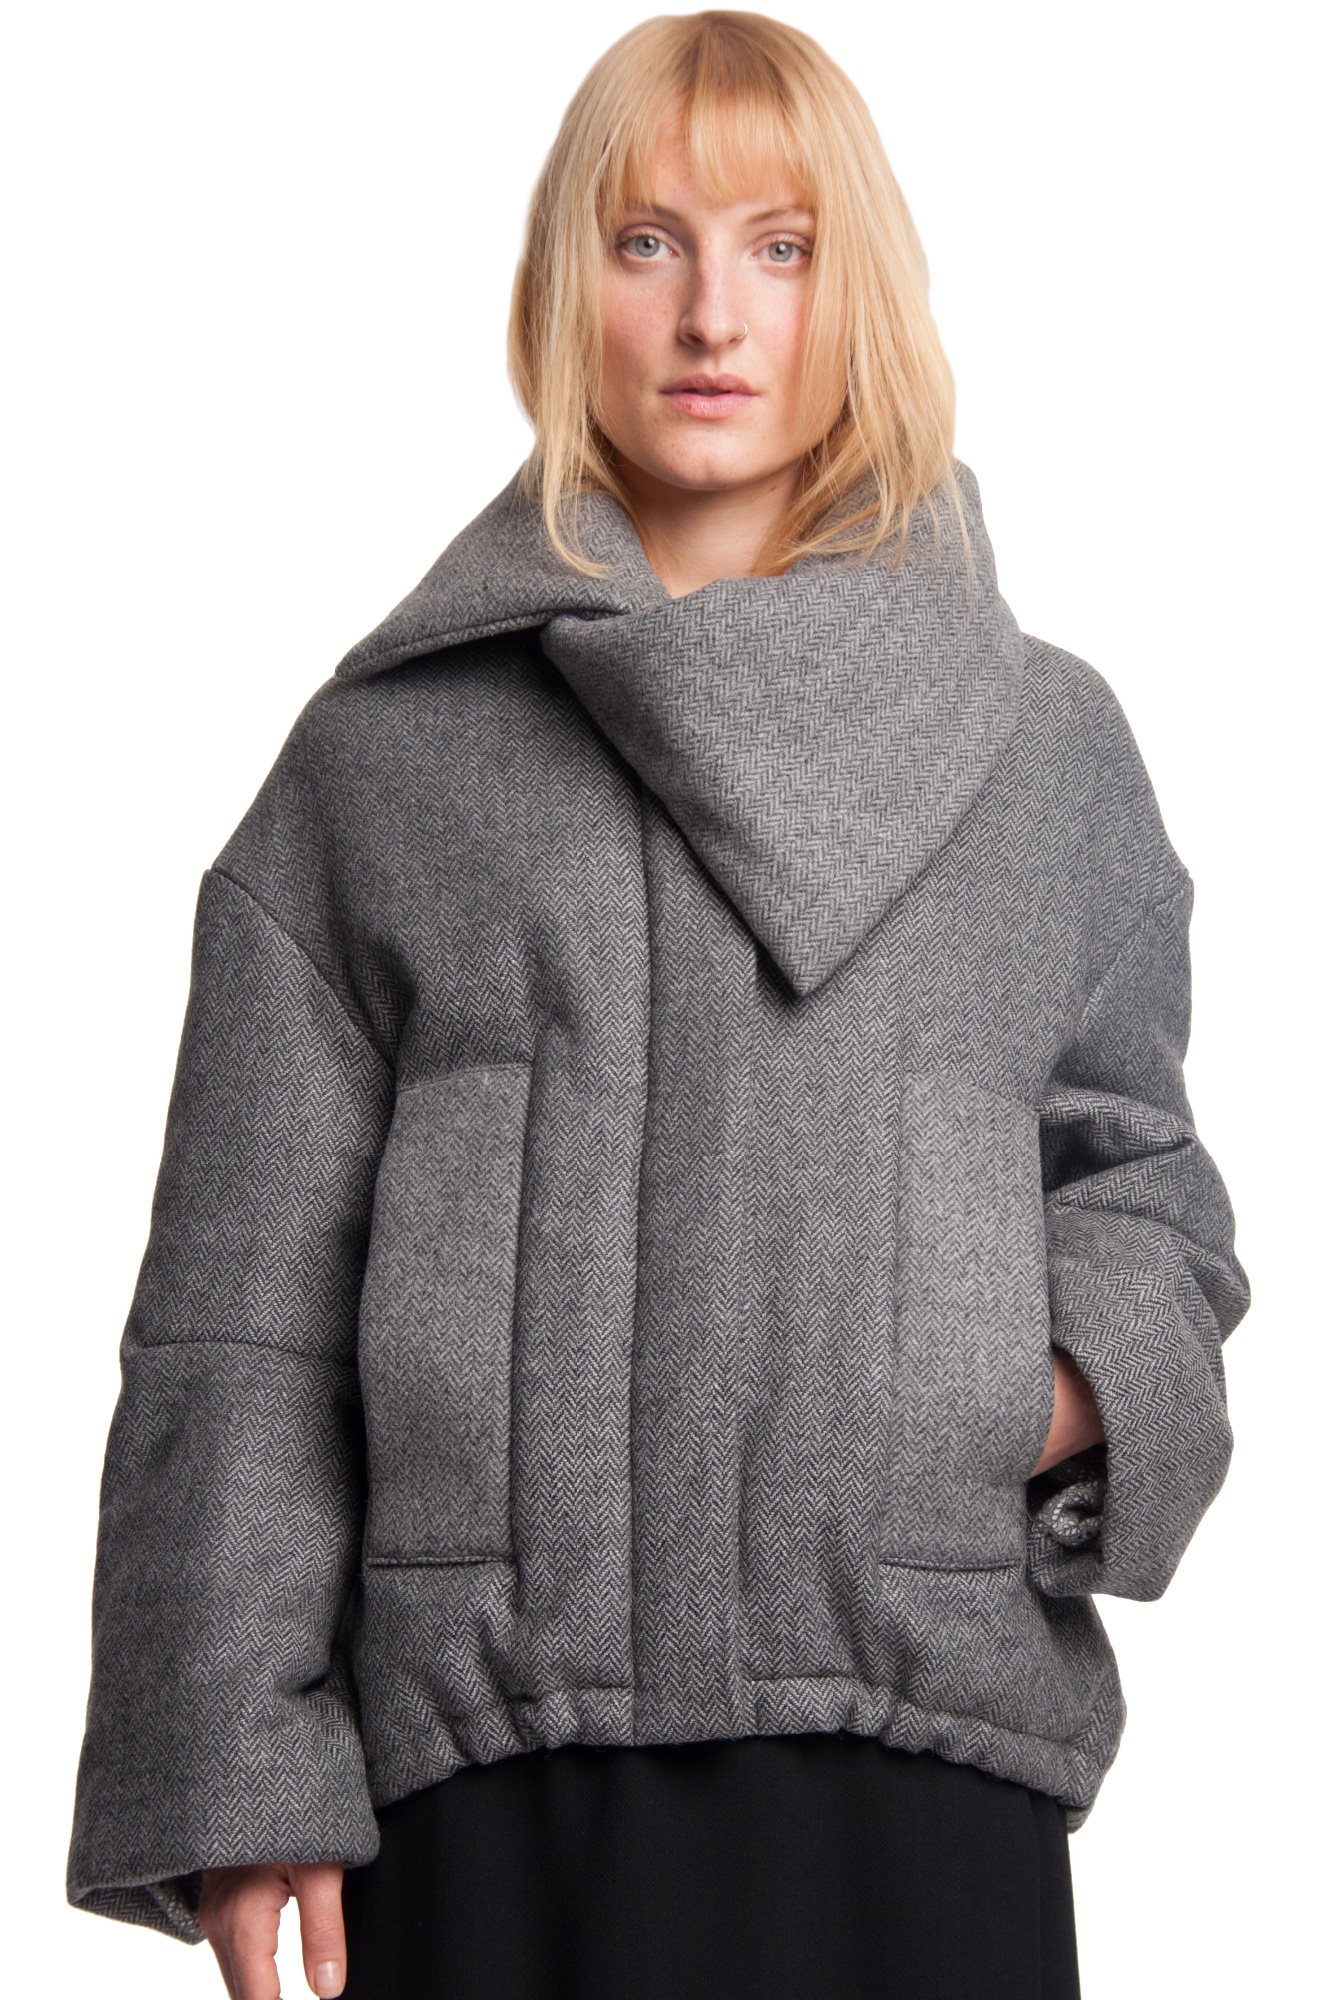 Fish jacket - Outerwear - Wool